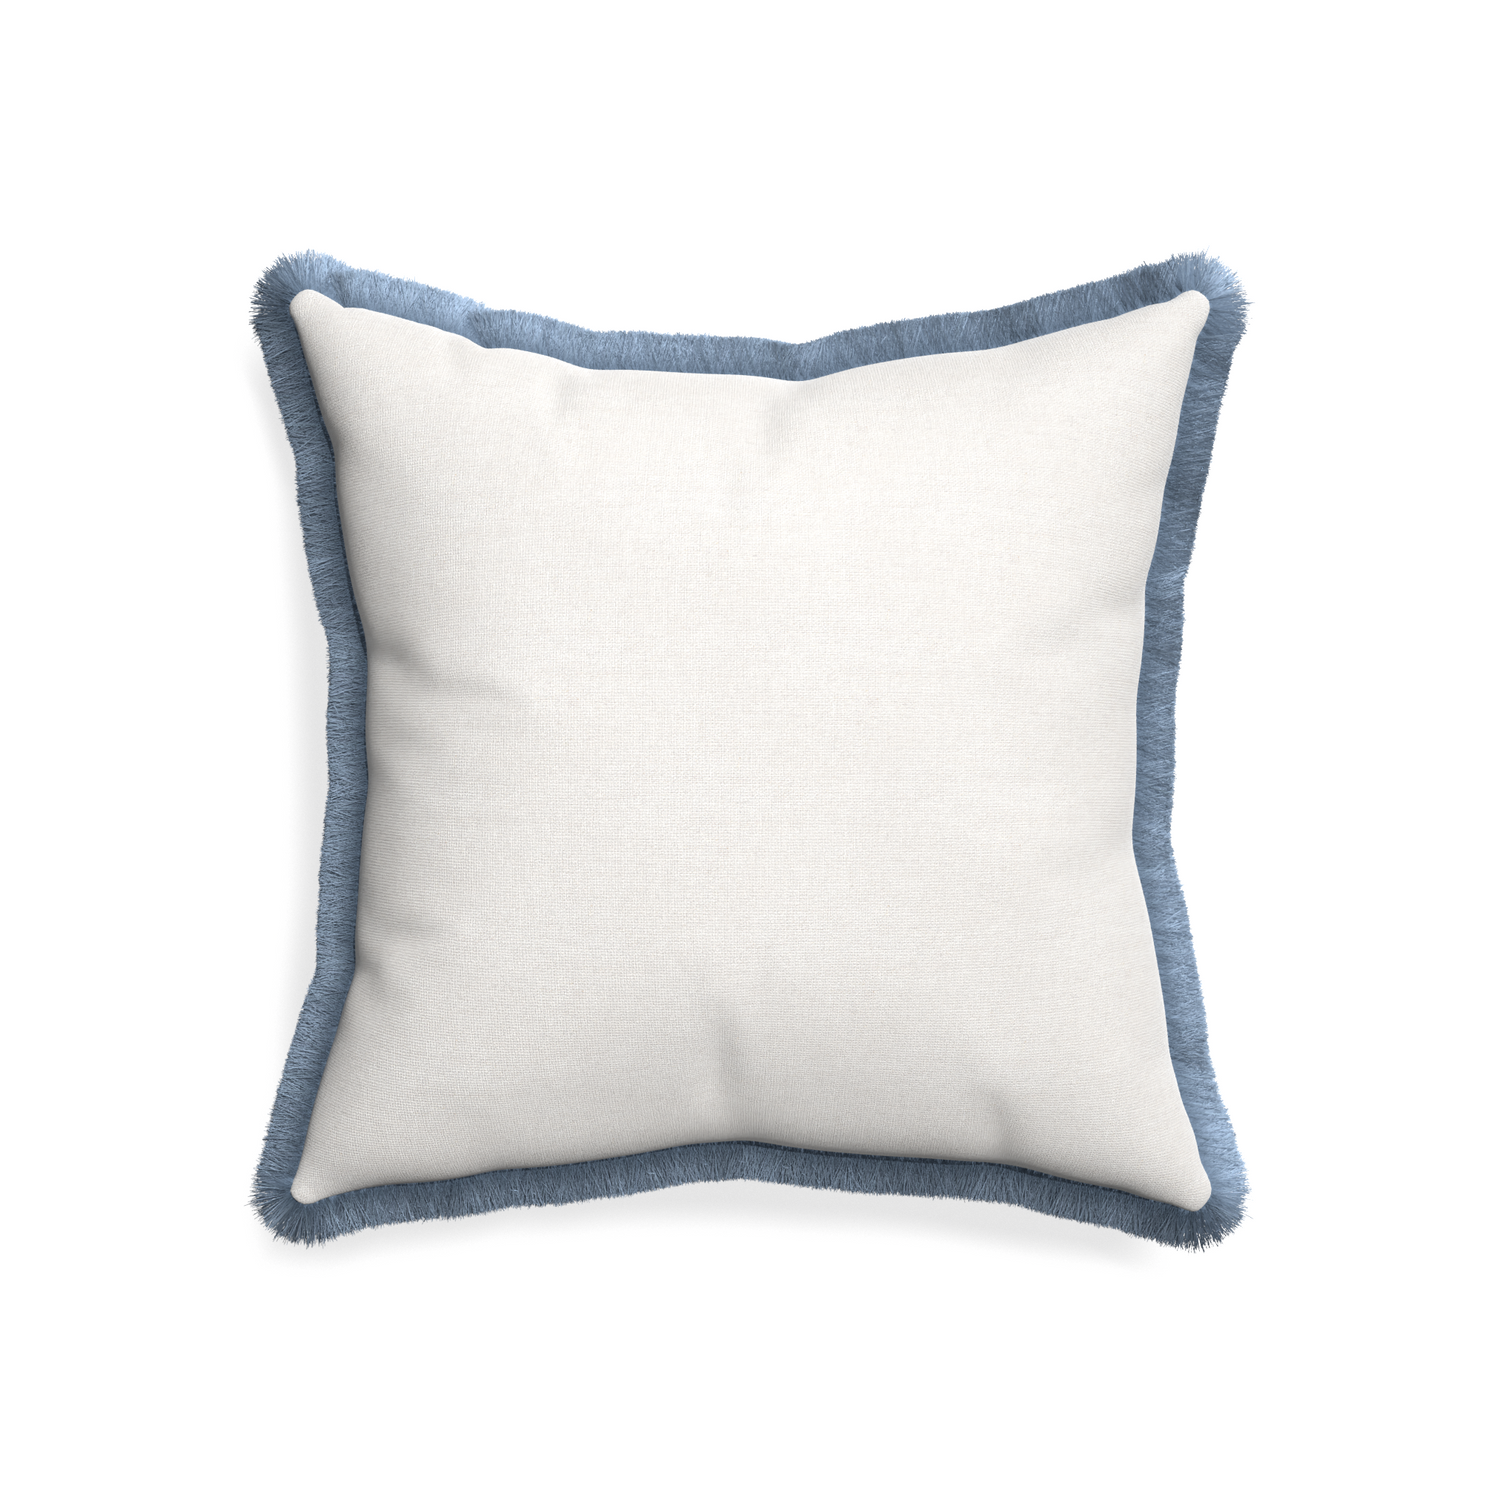 20-square flour custom pillow with sky fringe on white background